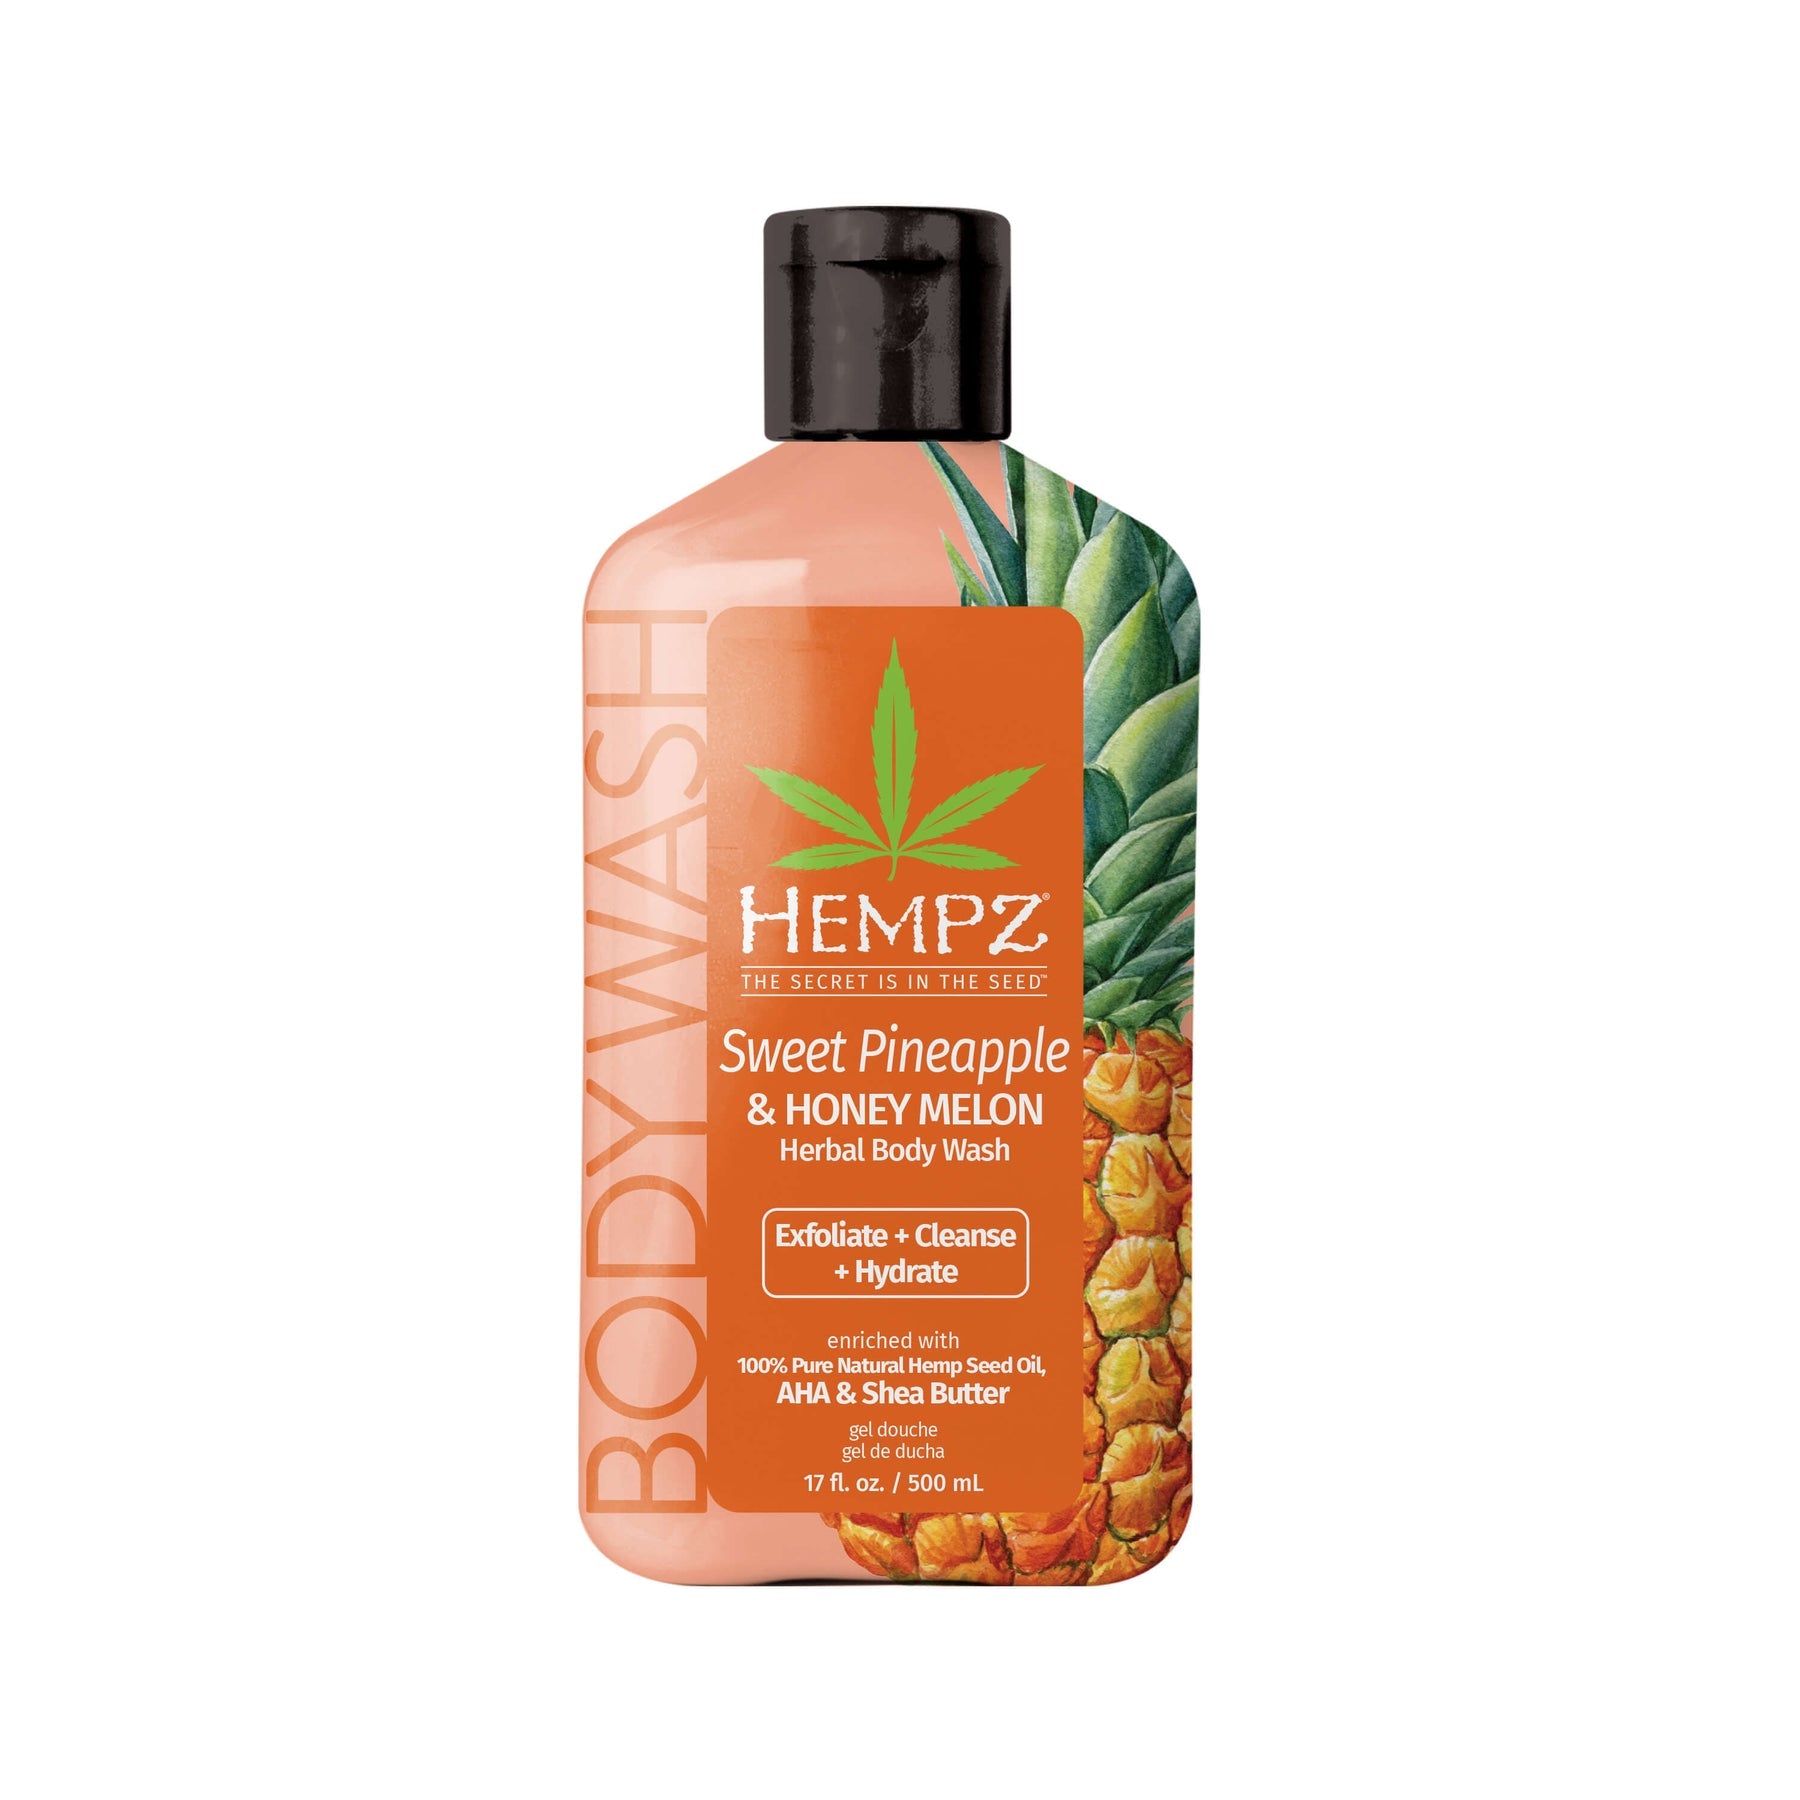 Hempz - Sweet Pineapple & Honey Melon Herbal Body Wash - Creata Beauty - Professional Beauty Products